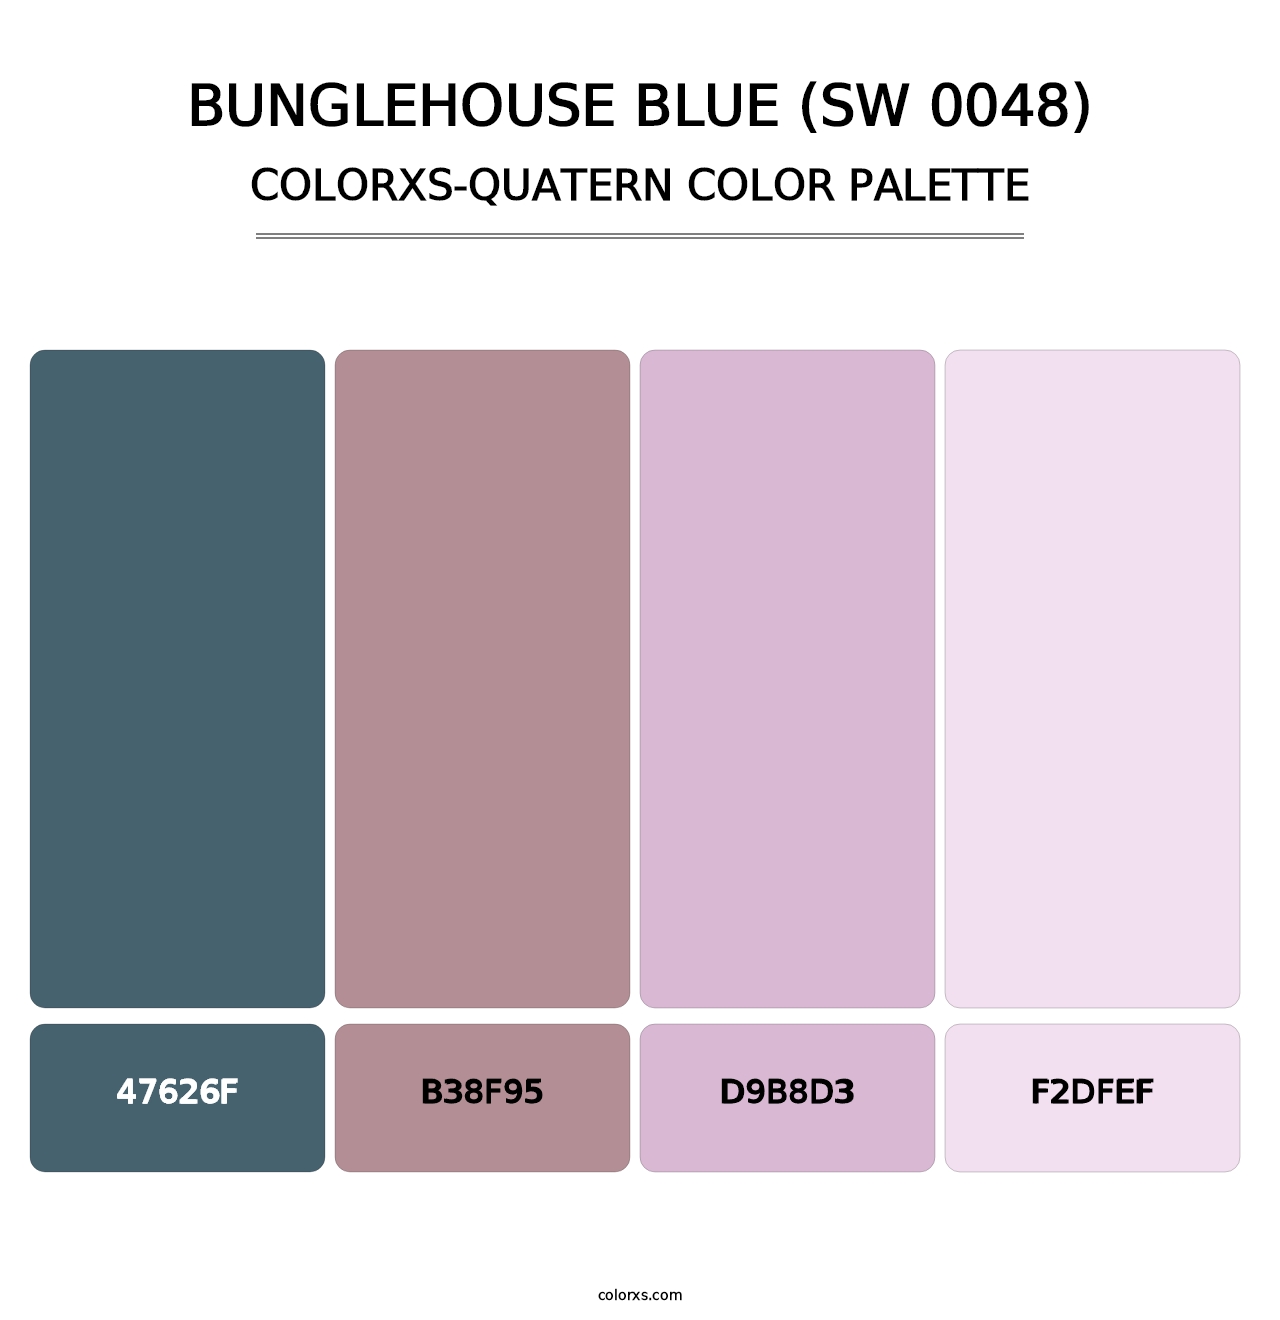 Bunglehouse Blue (SW 0048) - Colorxs Quatern Palette